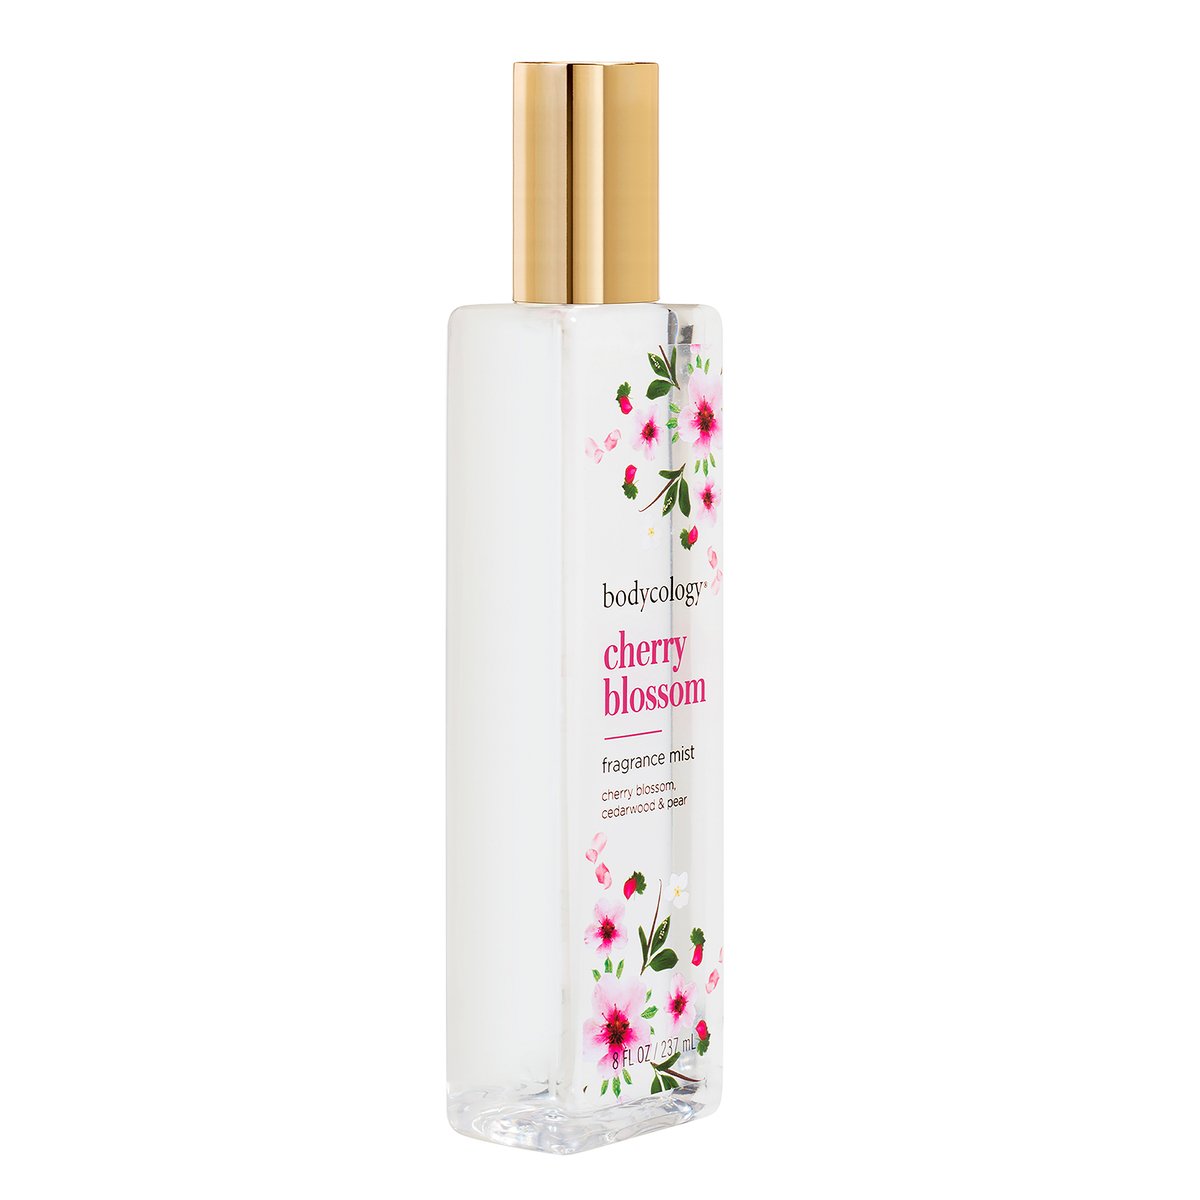 Bodycology Cherry Blossom Fragrance Mist 237 ml